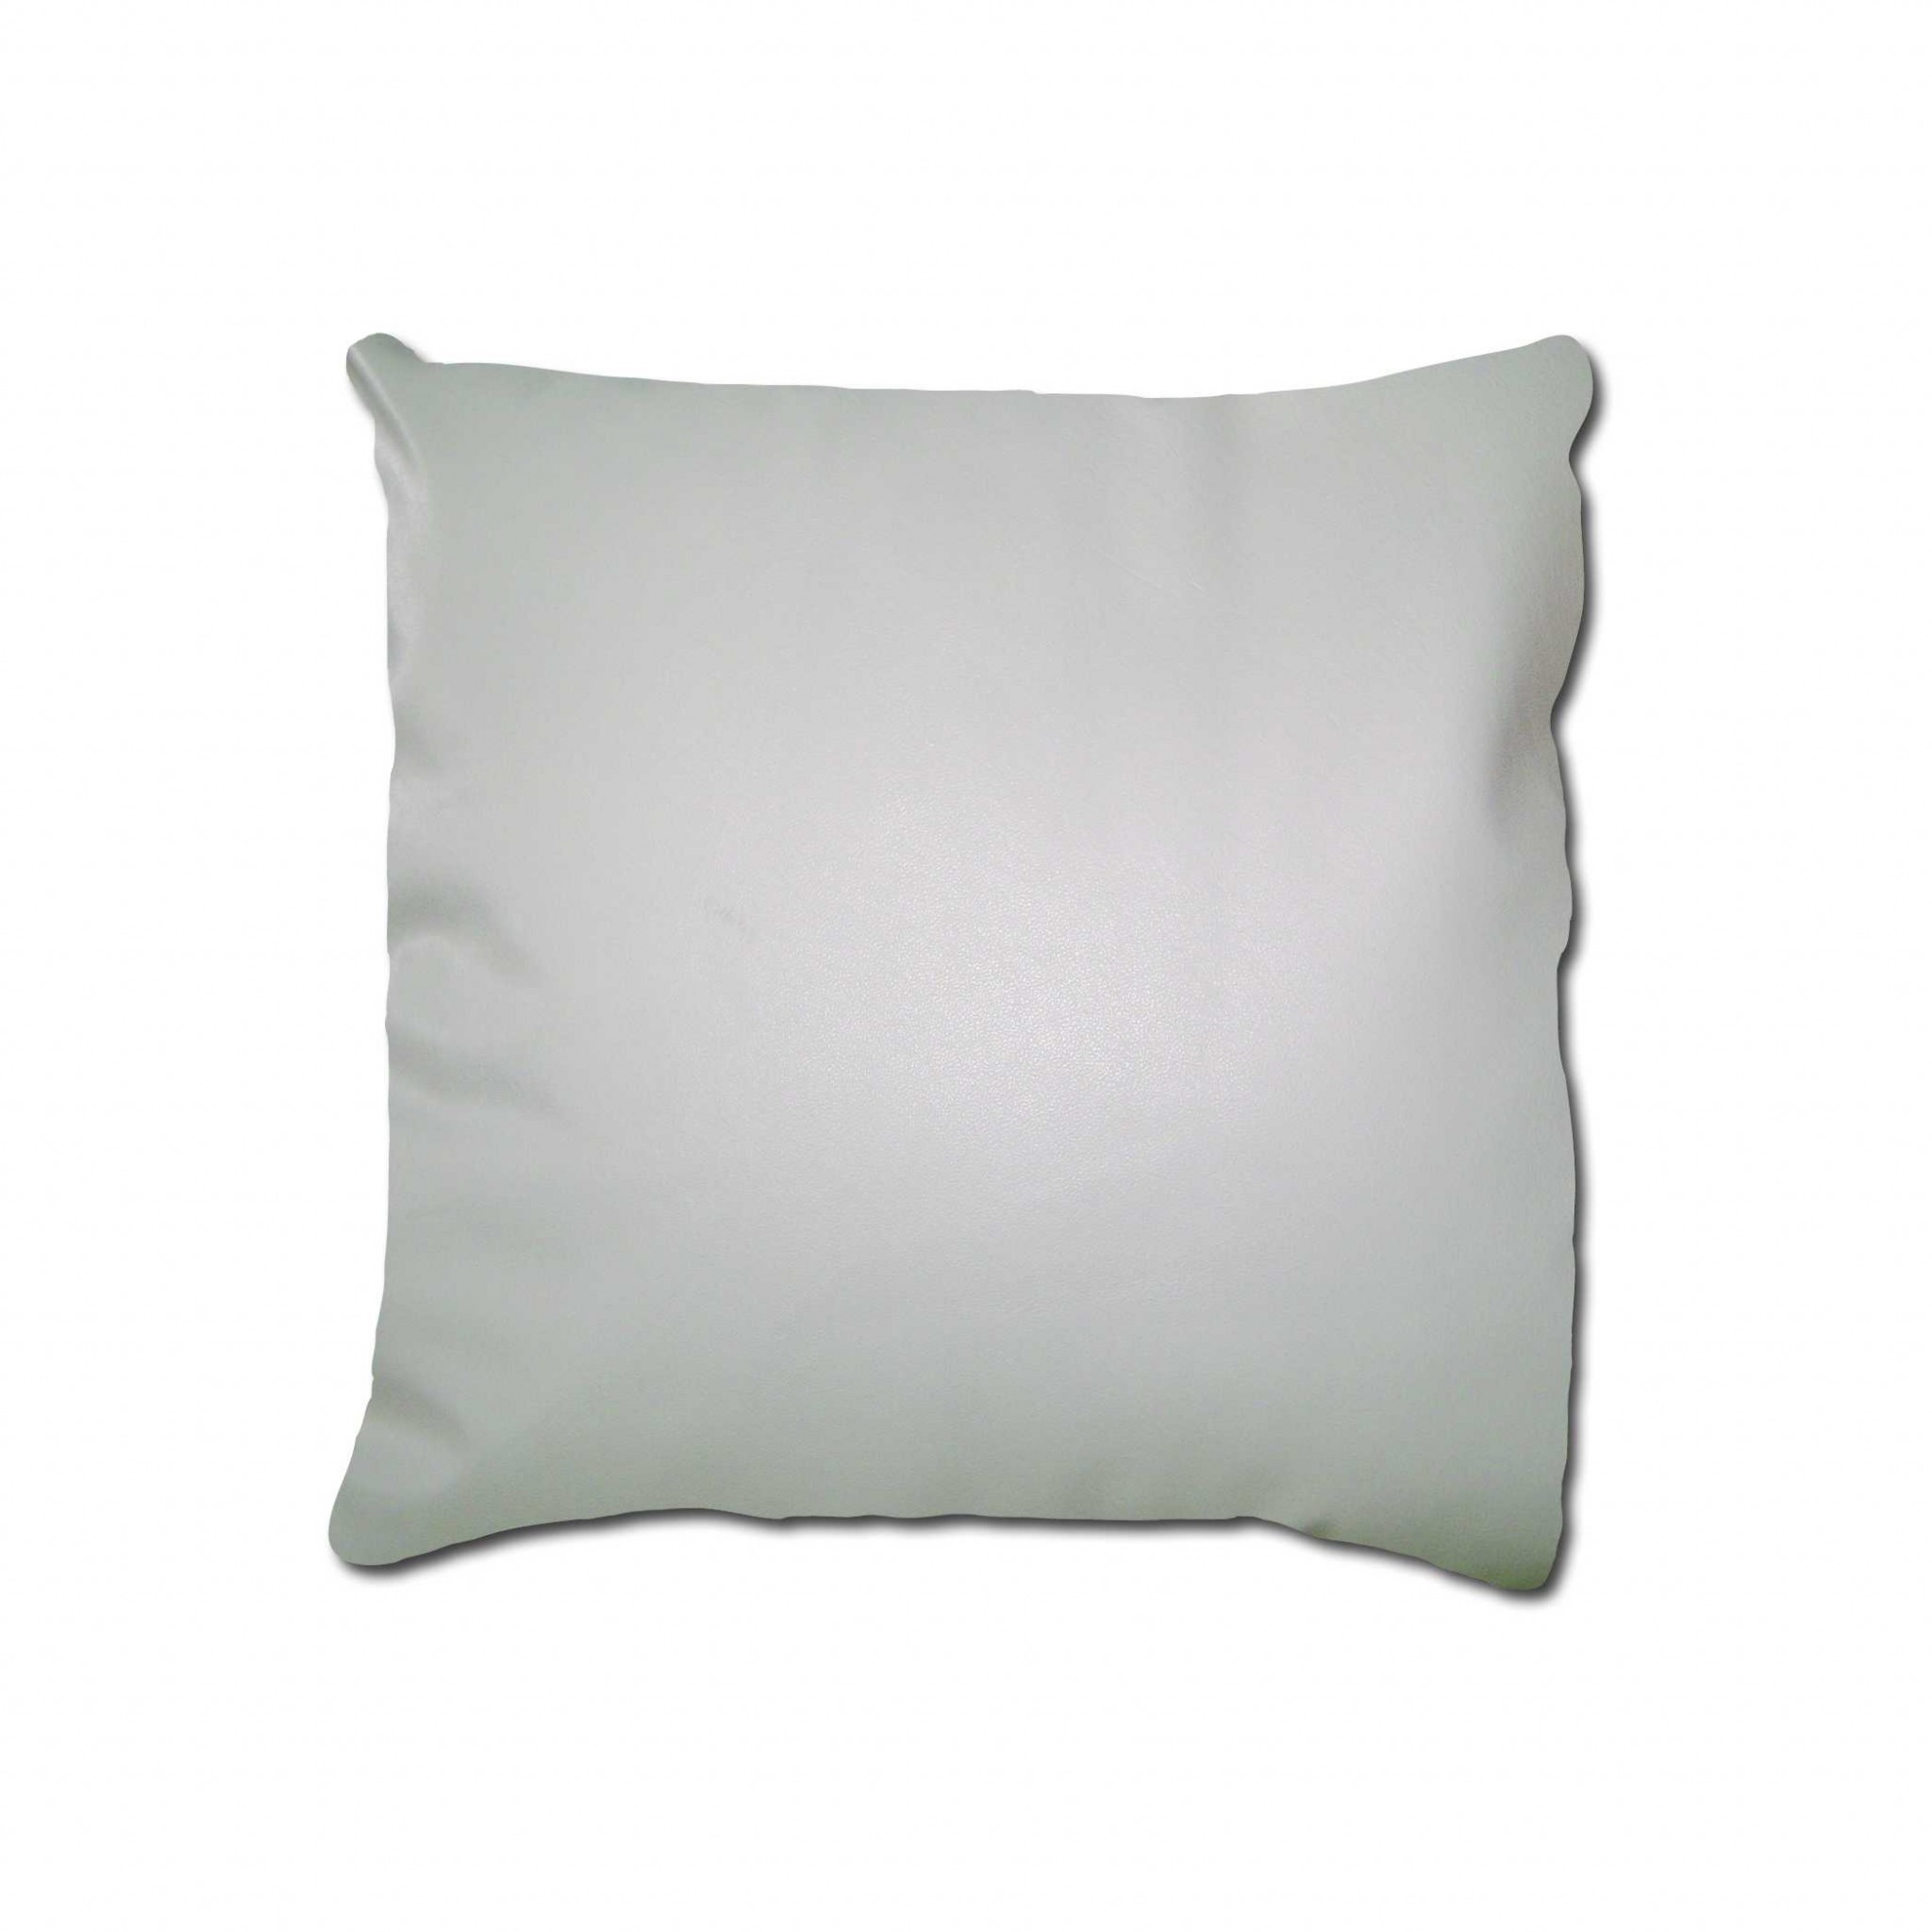 14" x 14" Beige, Sienna Leather - Pillow